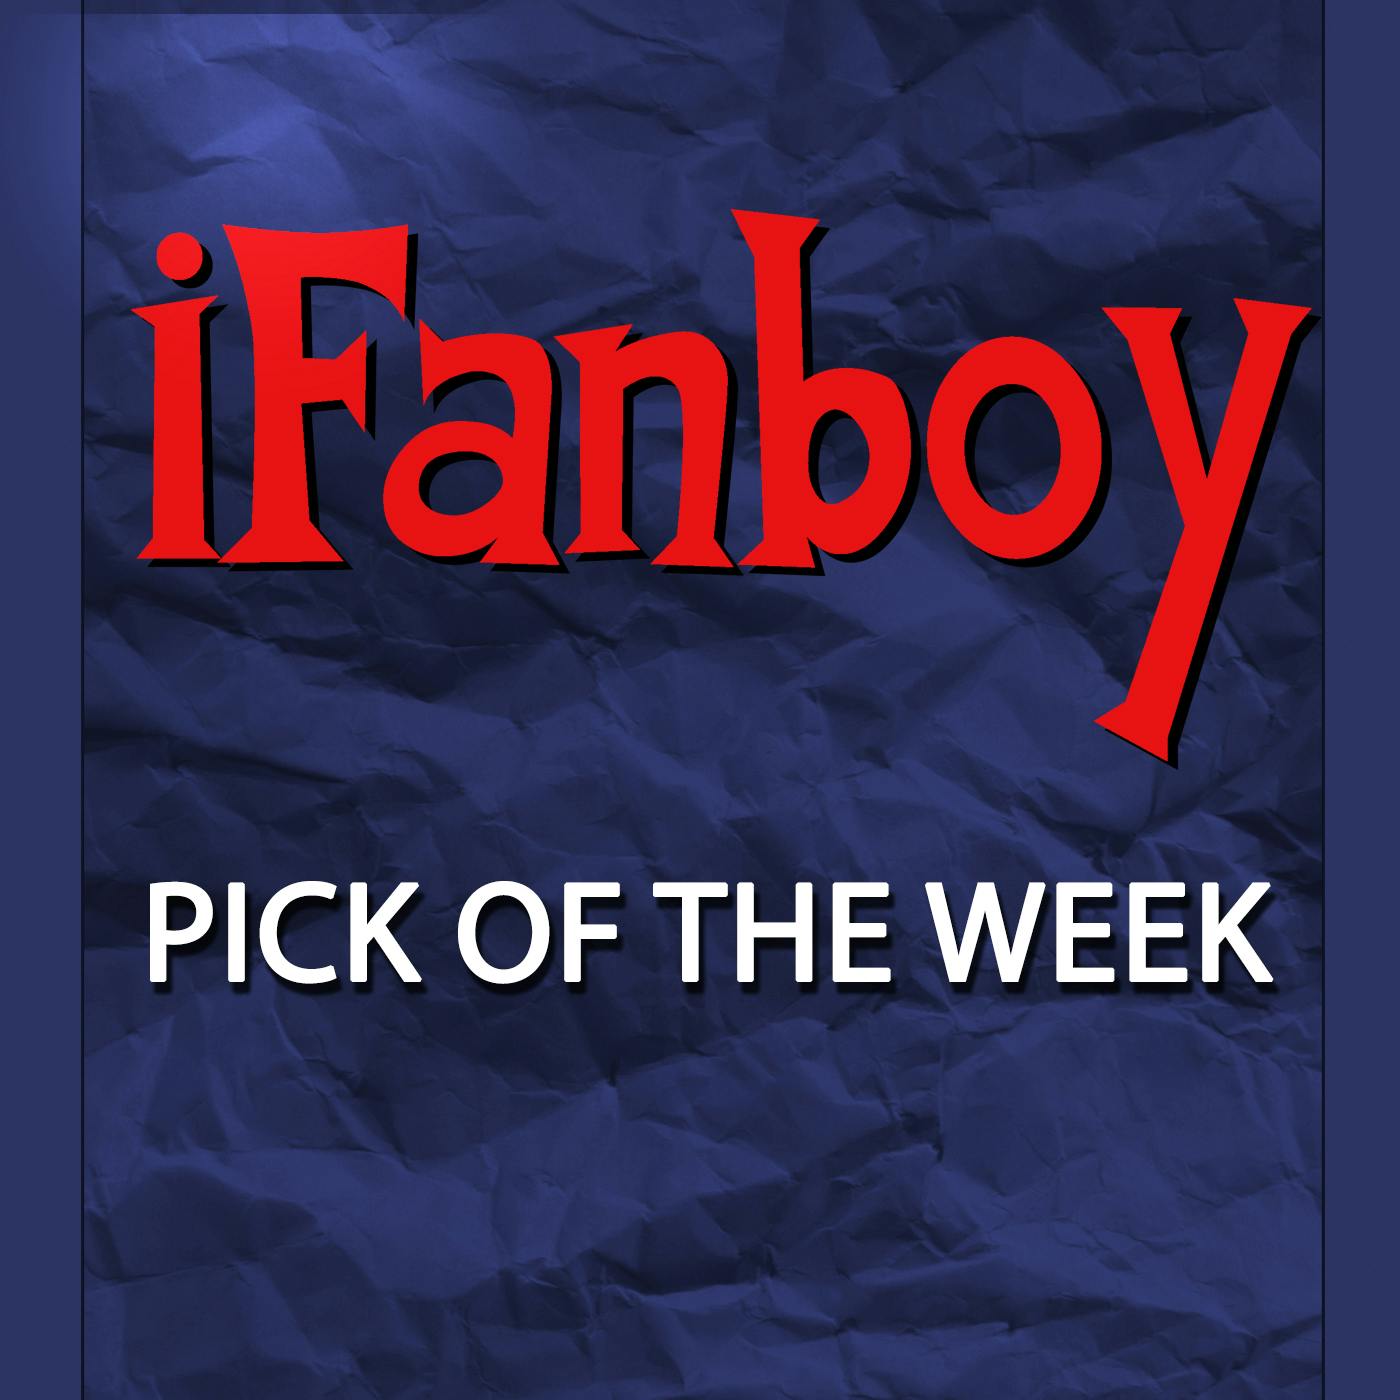 Pick of the Week #873 – Joe Fixit #4